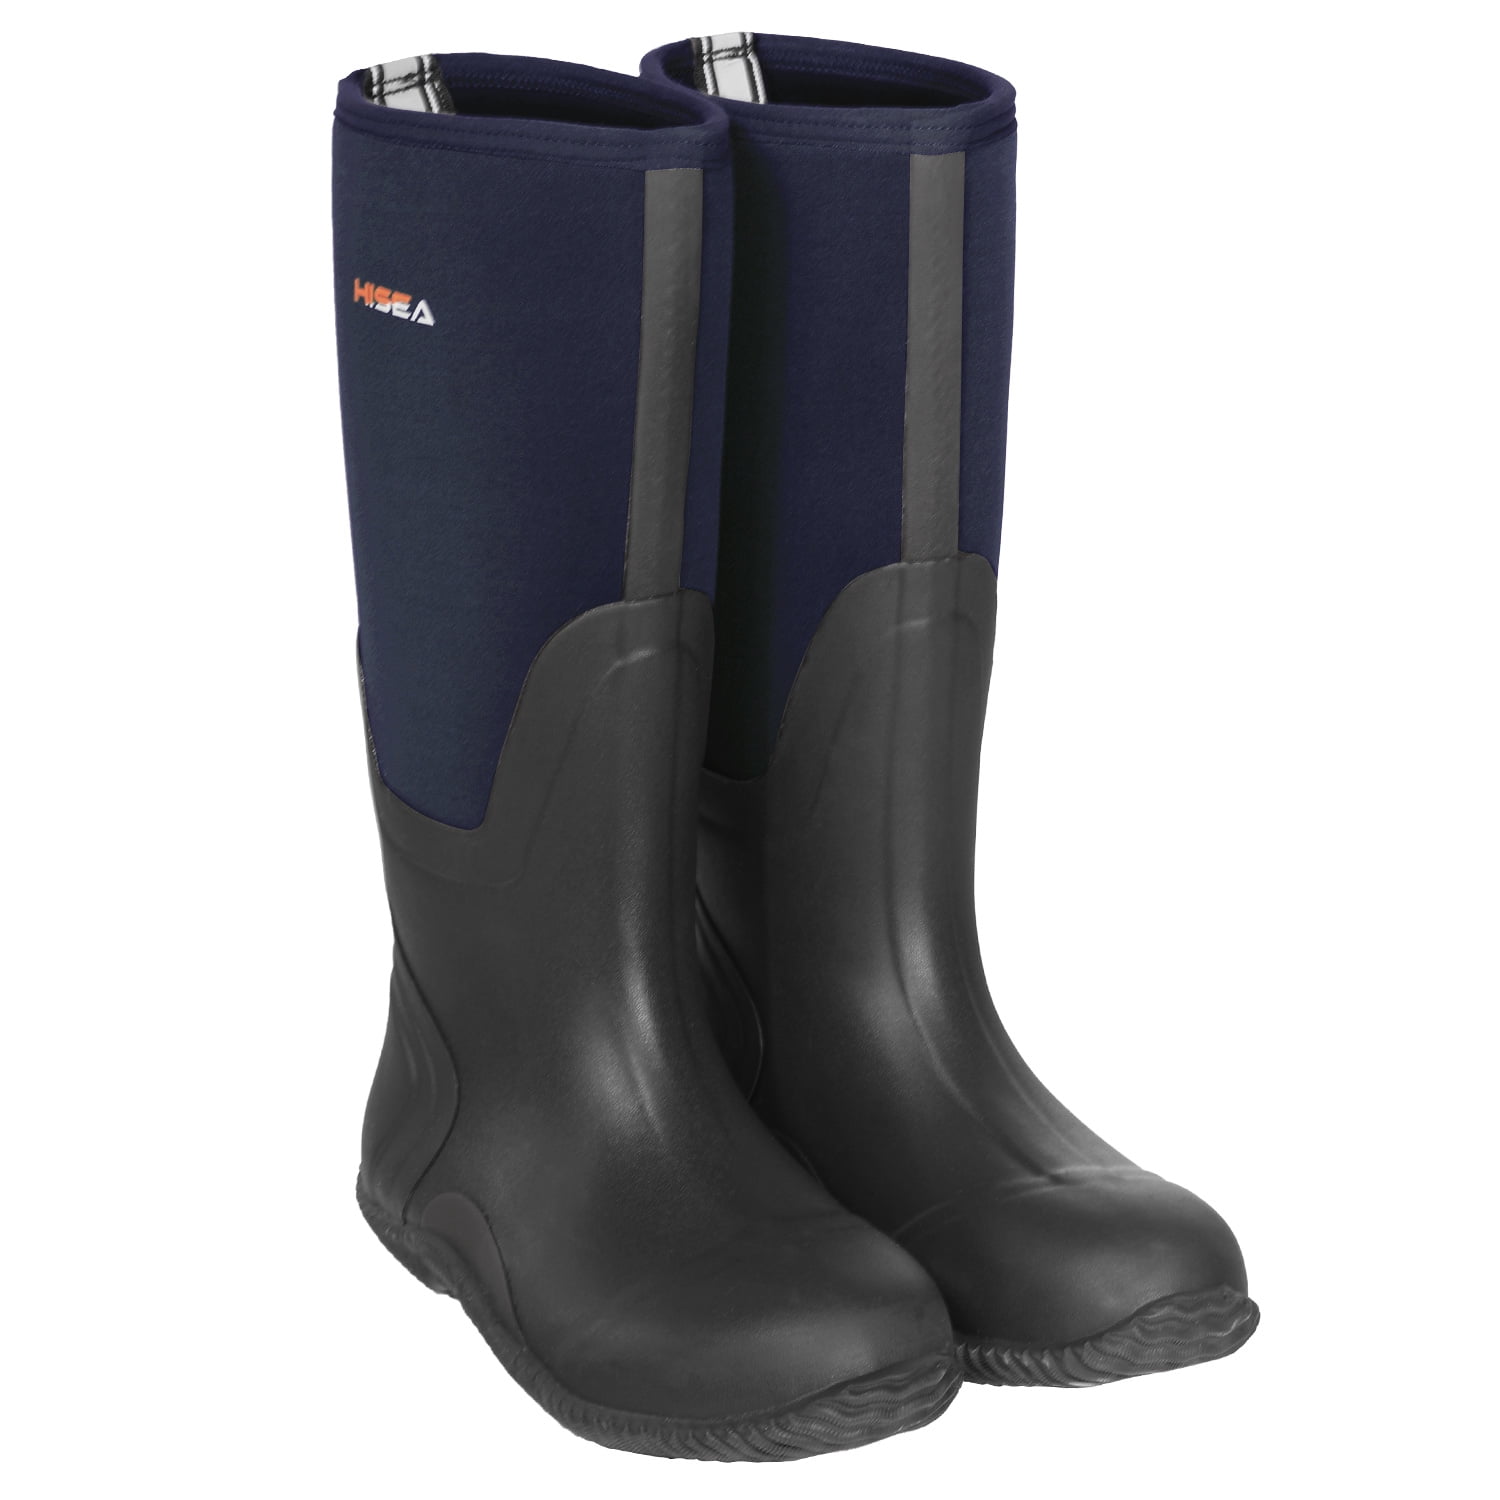 HISEA Men's Rain Boots Waterproof Work Boots Insulated Rubber Boot